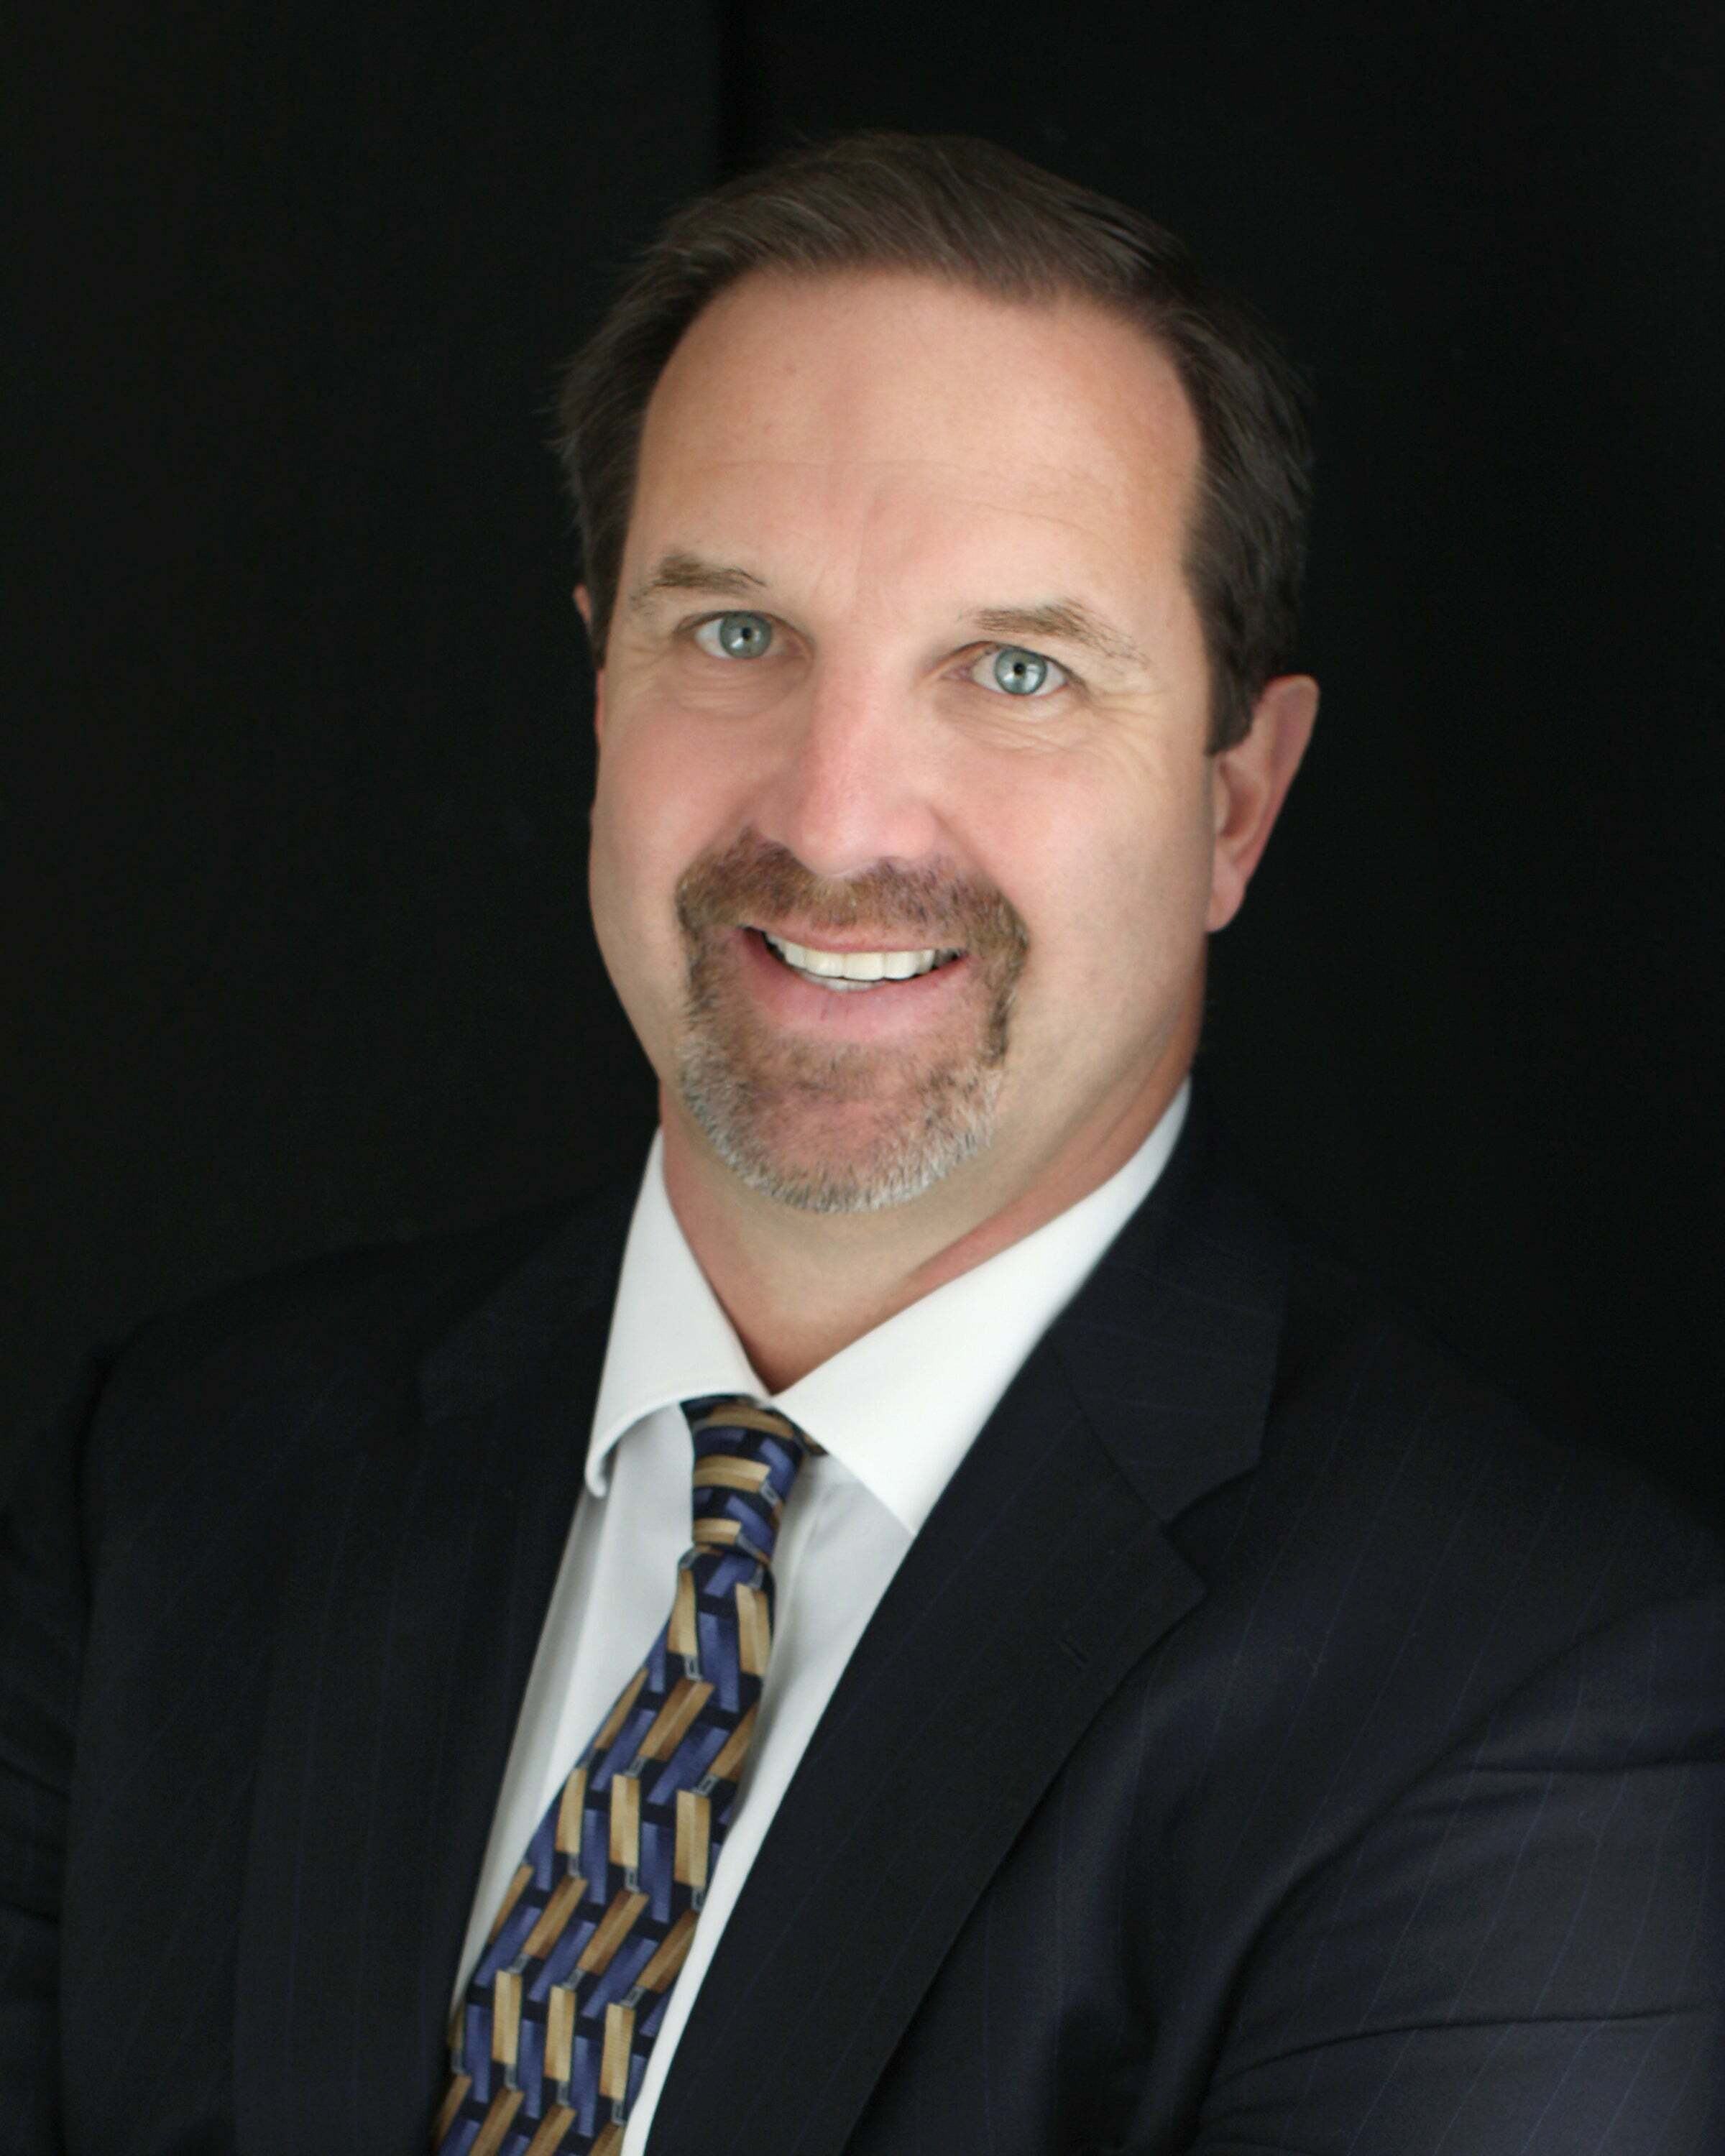 David McCoy, Associate Real Estate Broker in Roseville, Reliance Partners